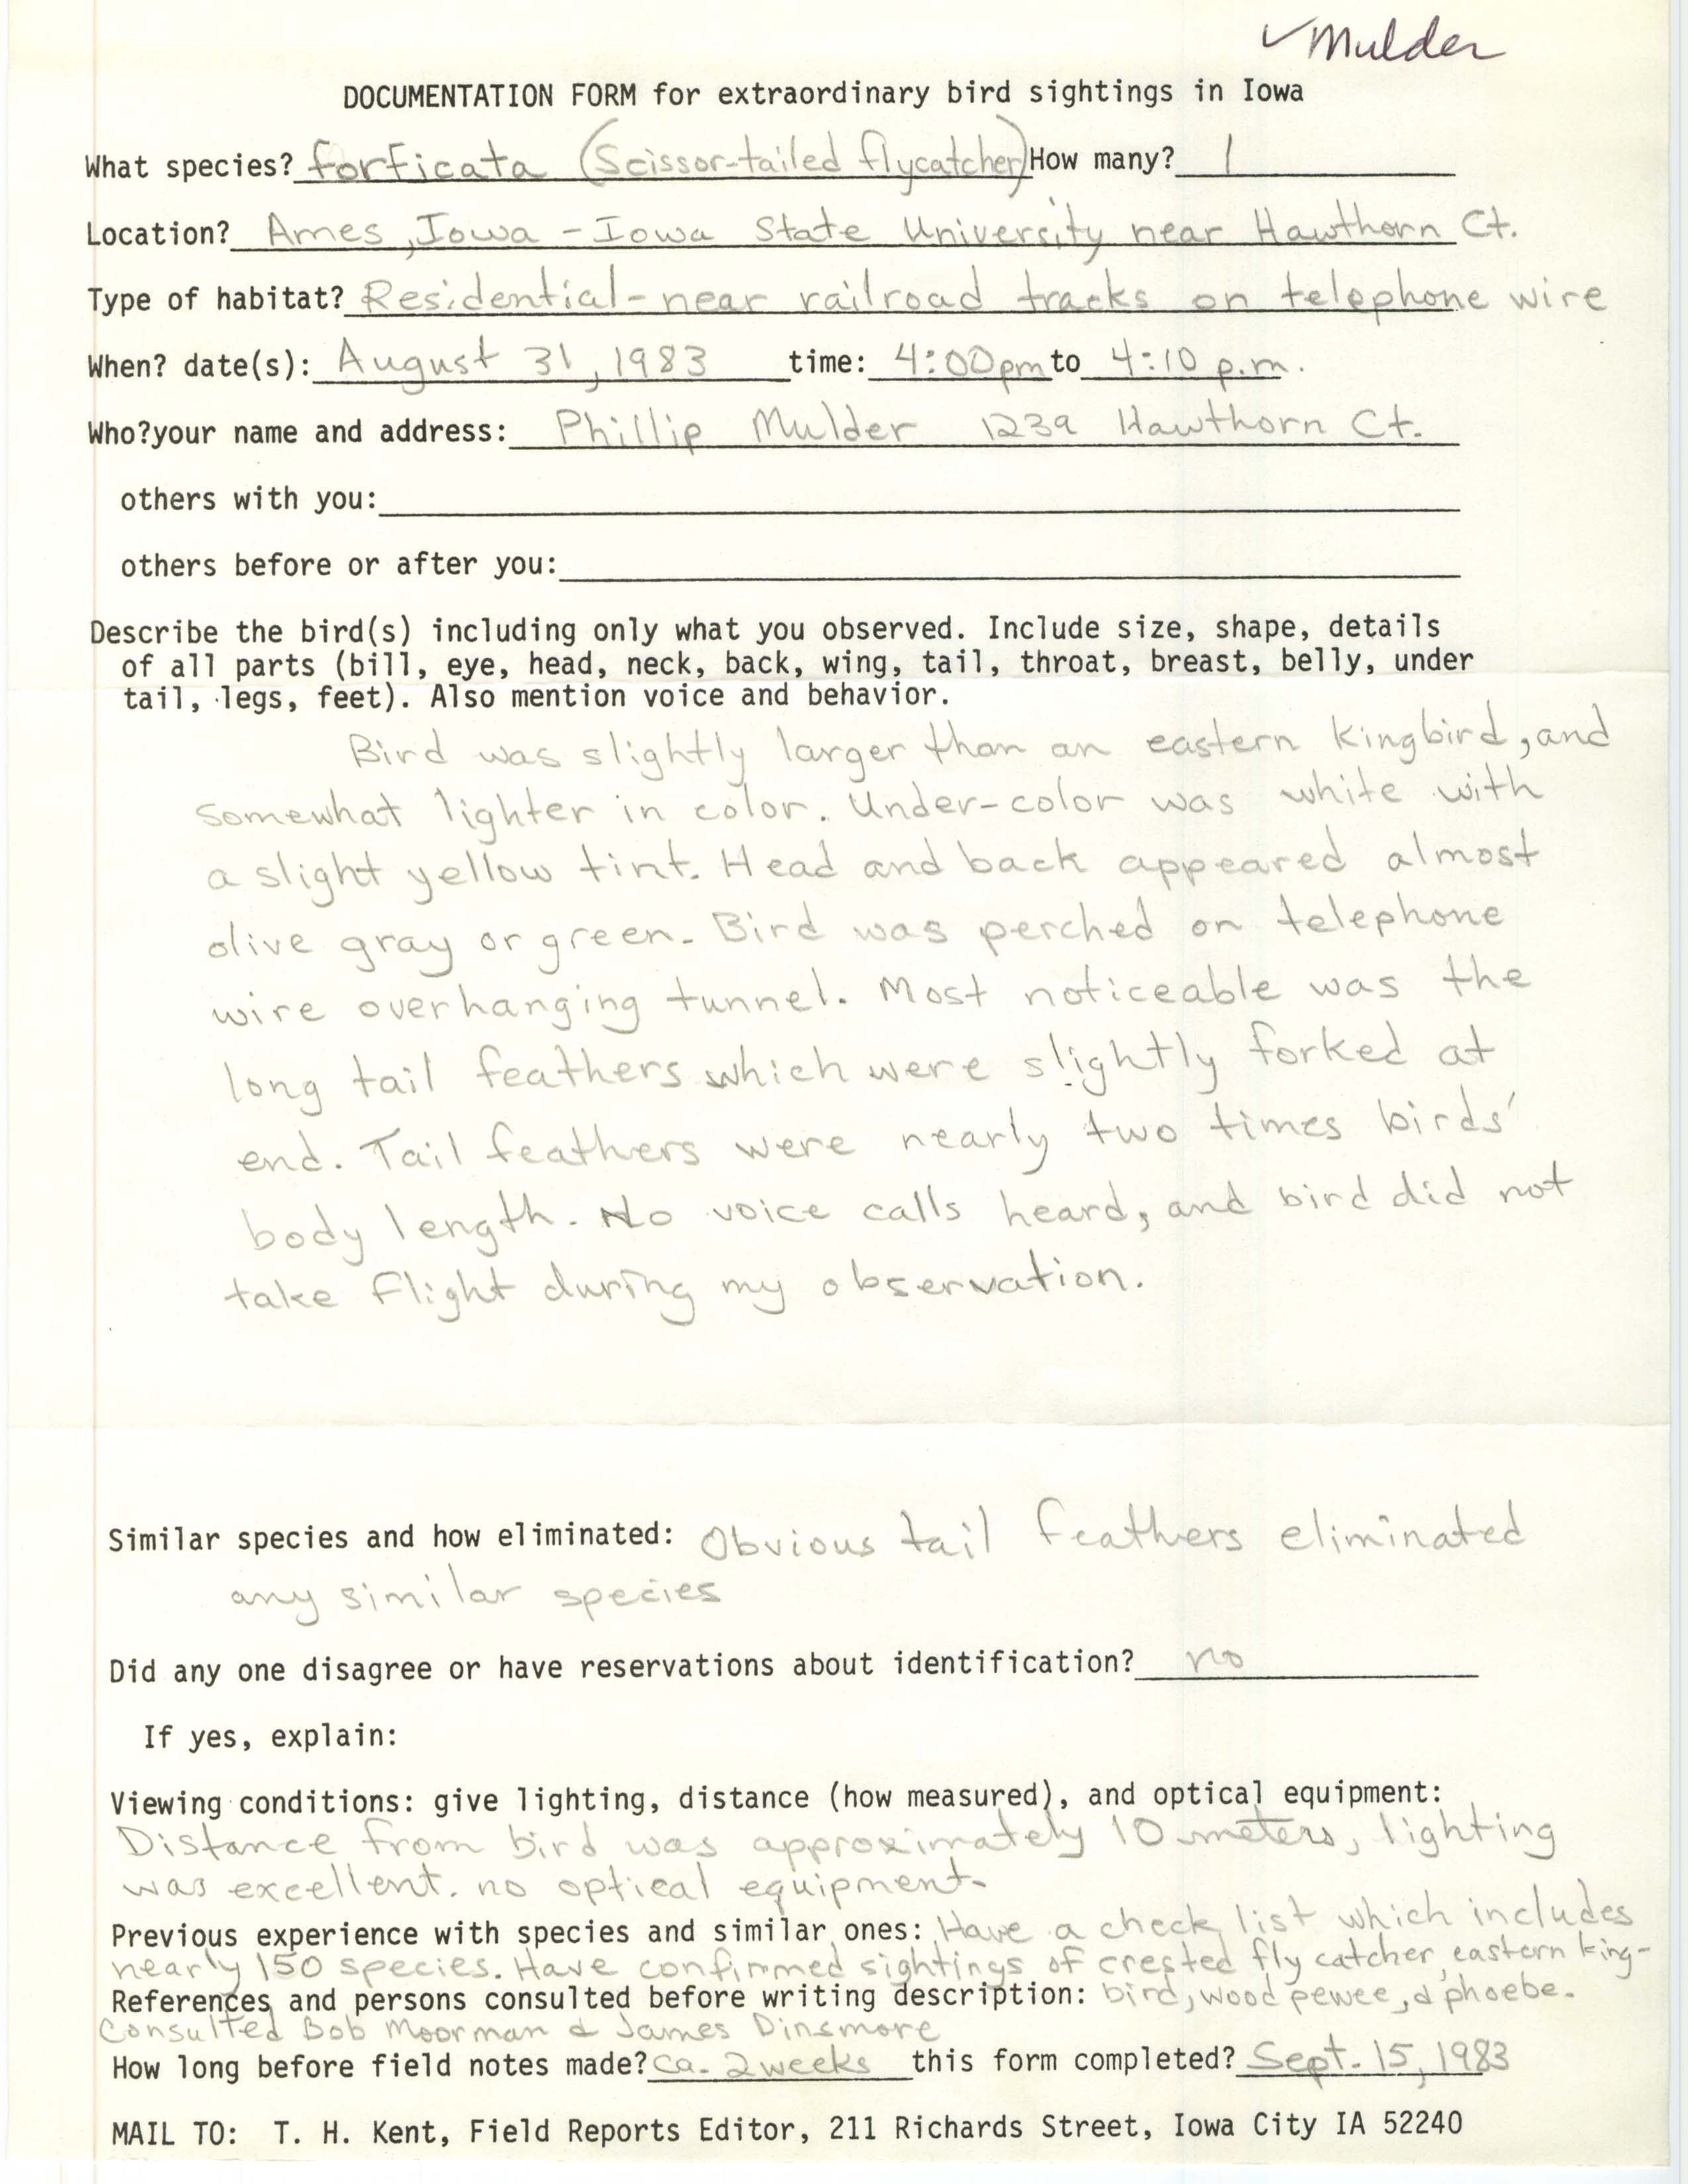 Rare bird documentation for Scissor-tailed Flycatcher at Iowa State University, 1983